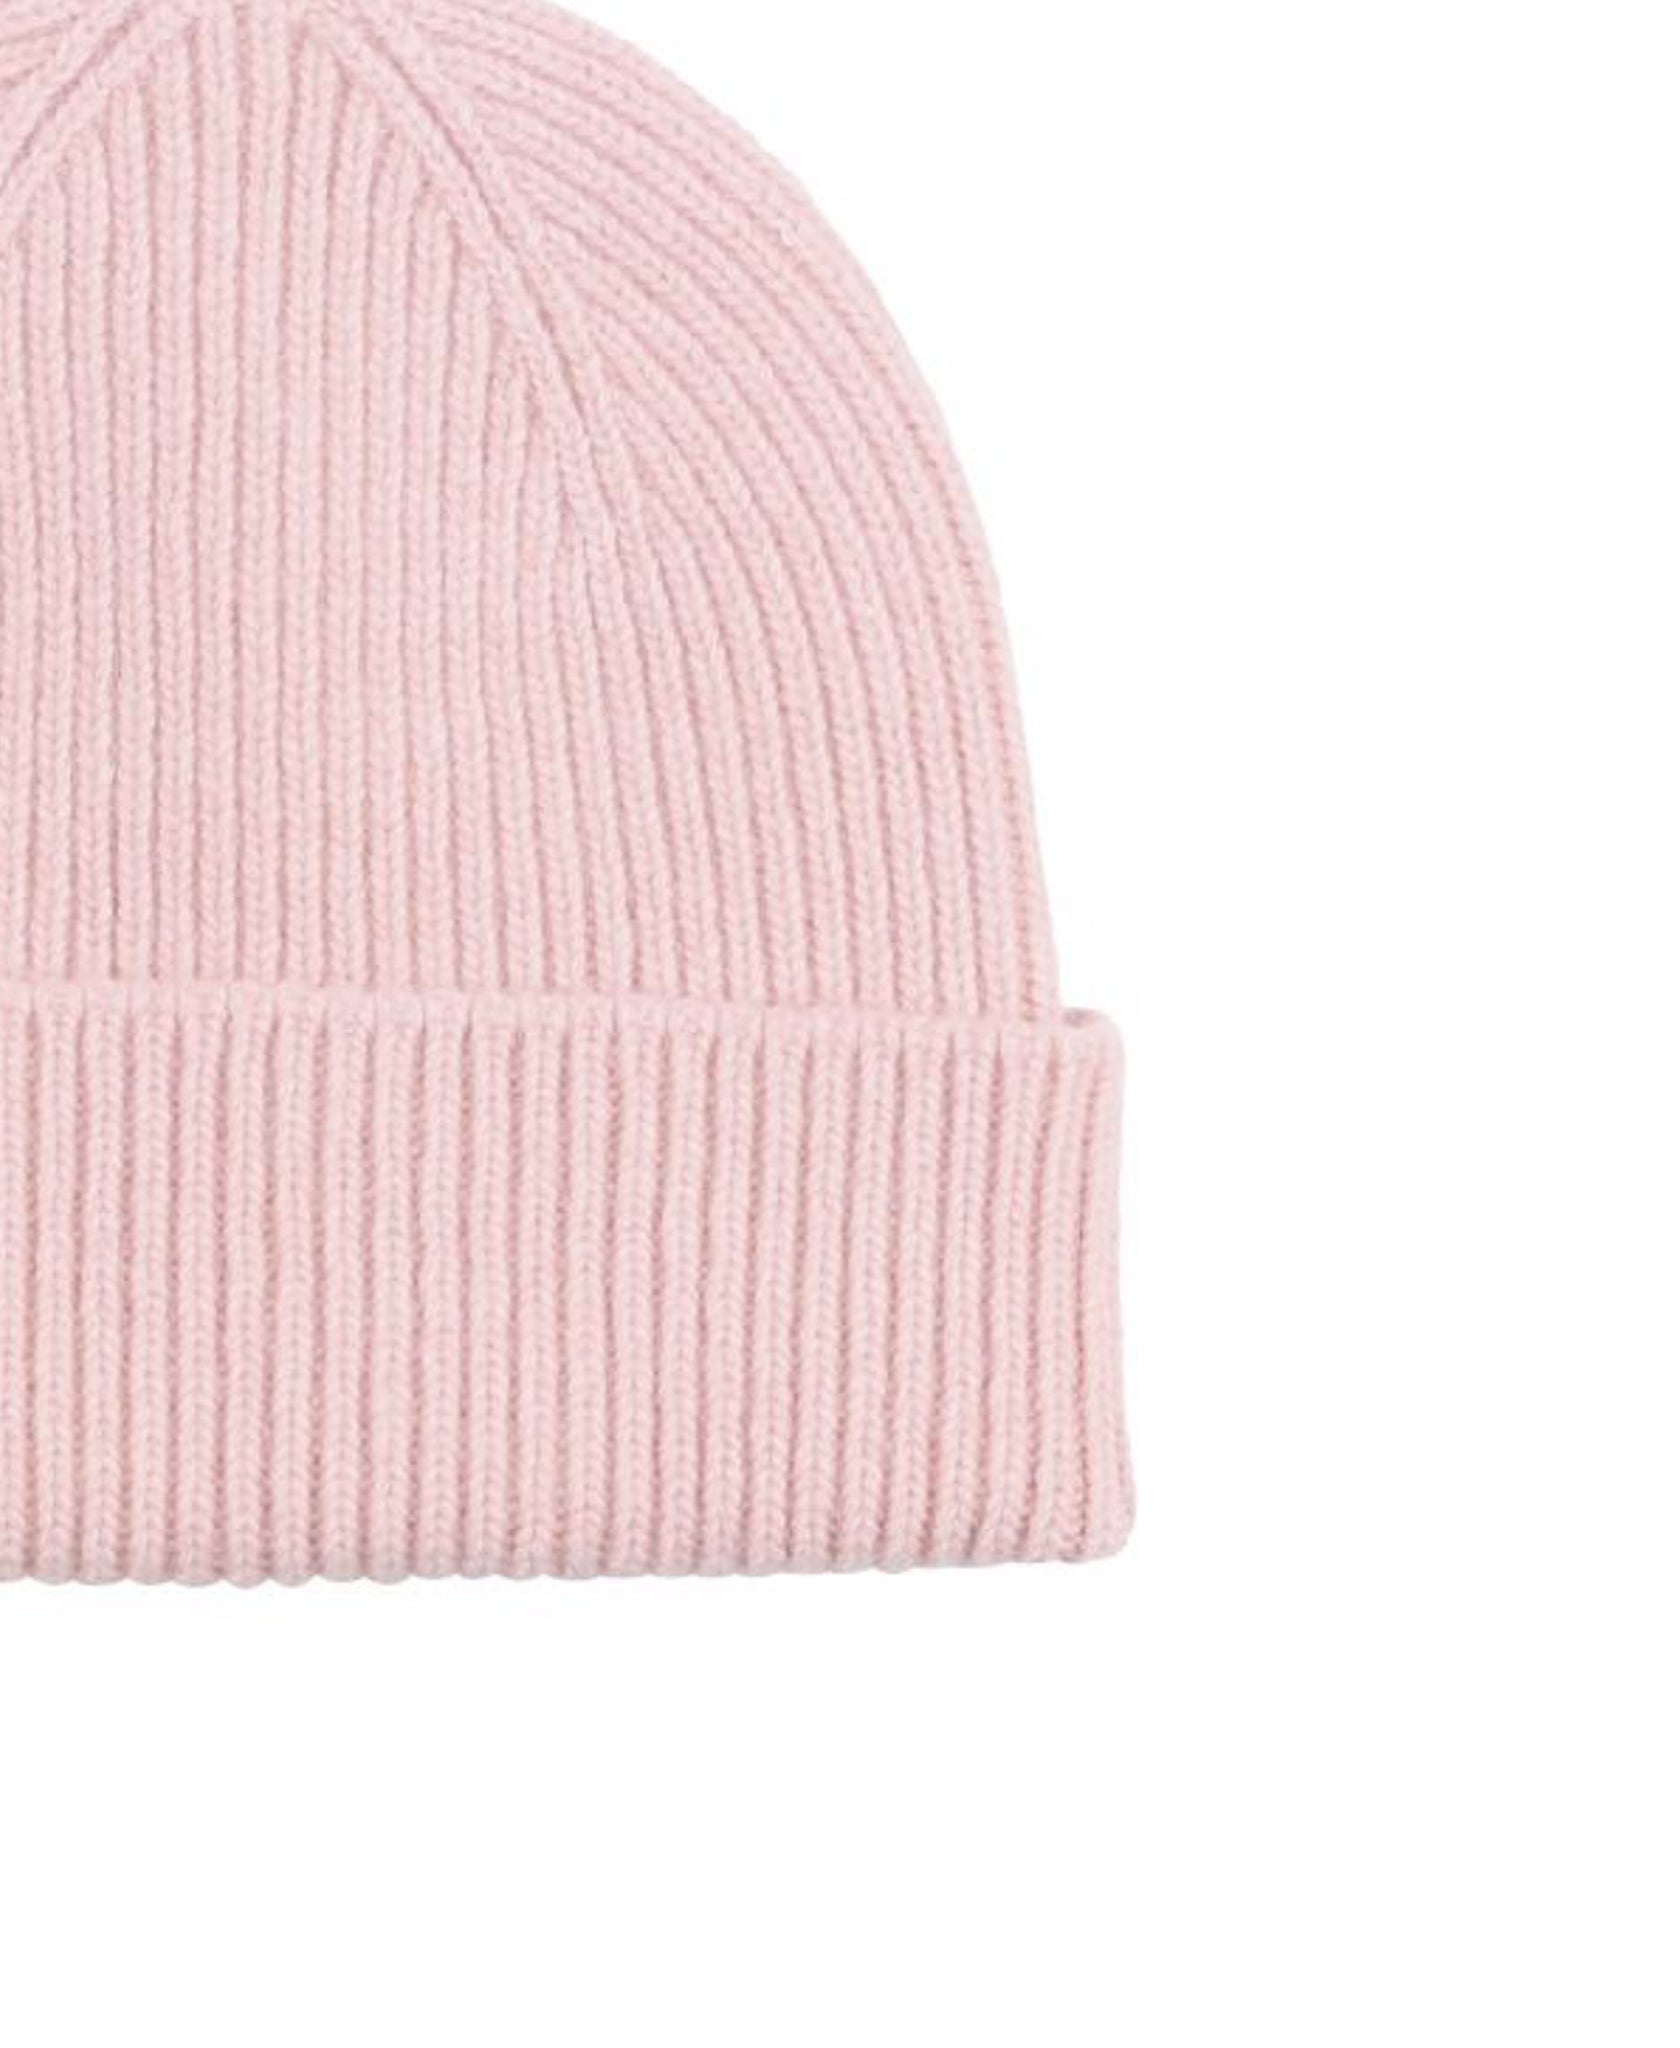 Colorful Standard Pink Cap